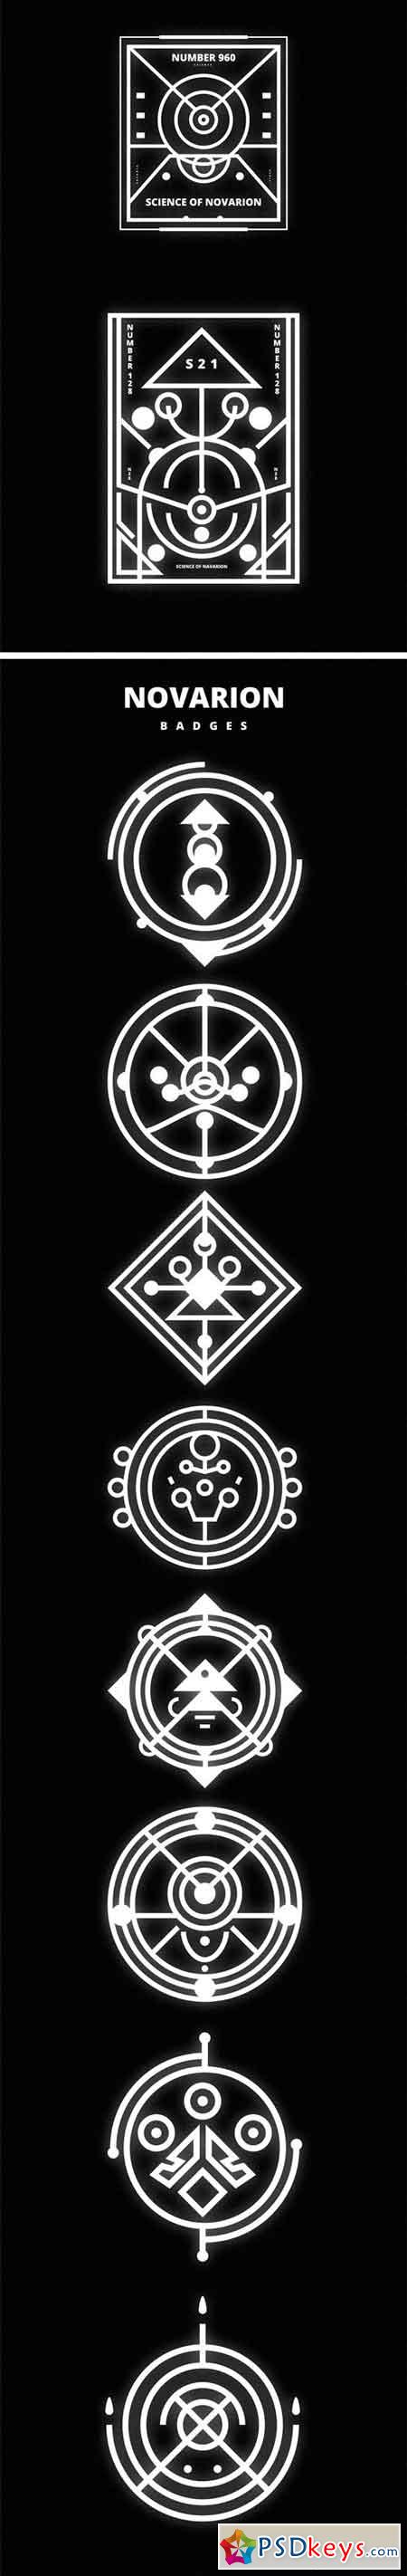 Novarion Sci Fi Logos & Icons 1541007